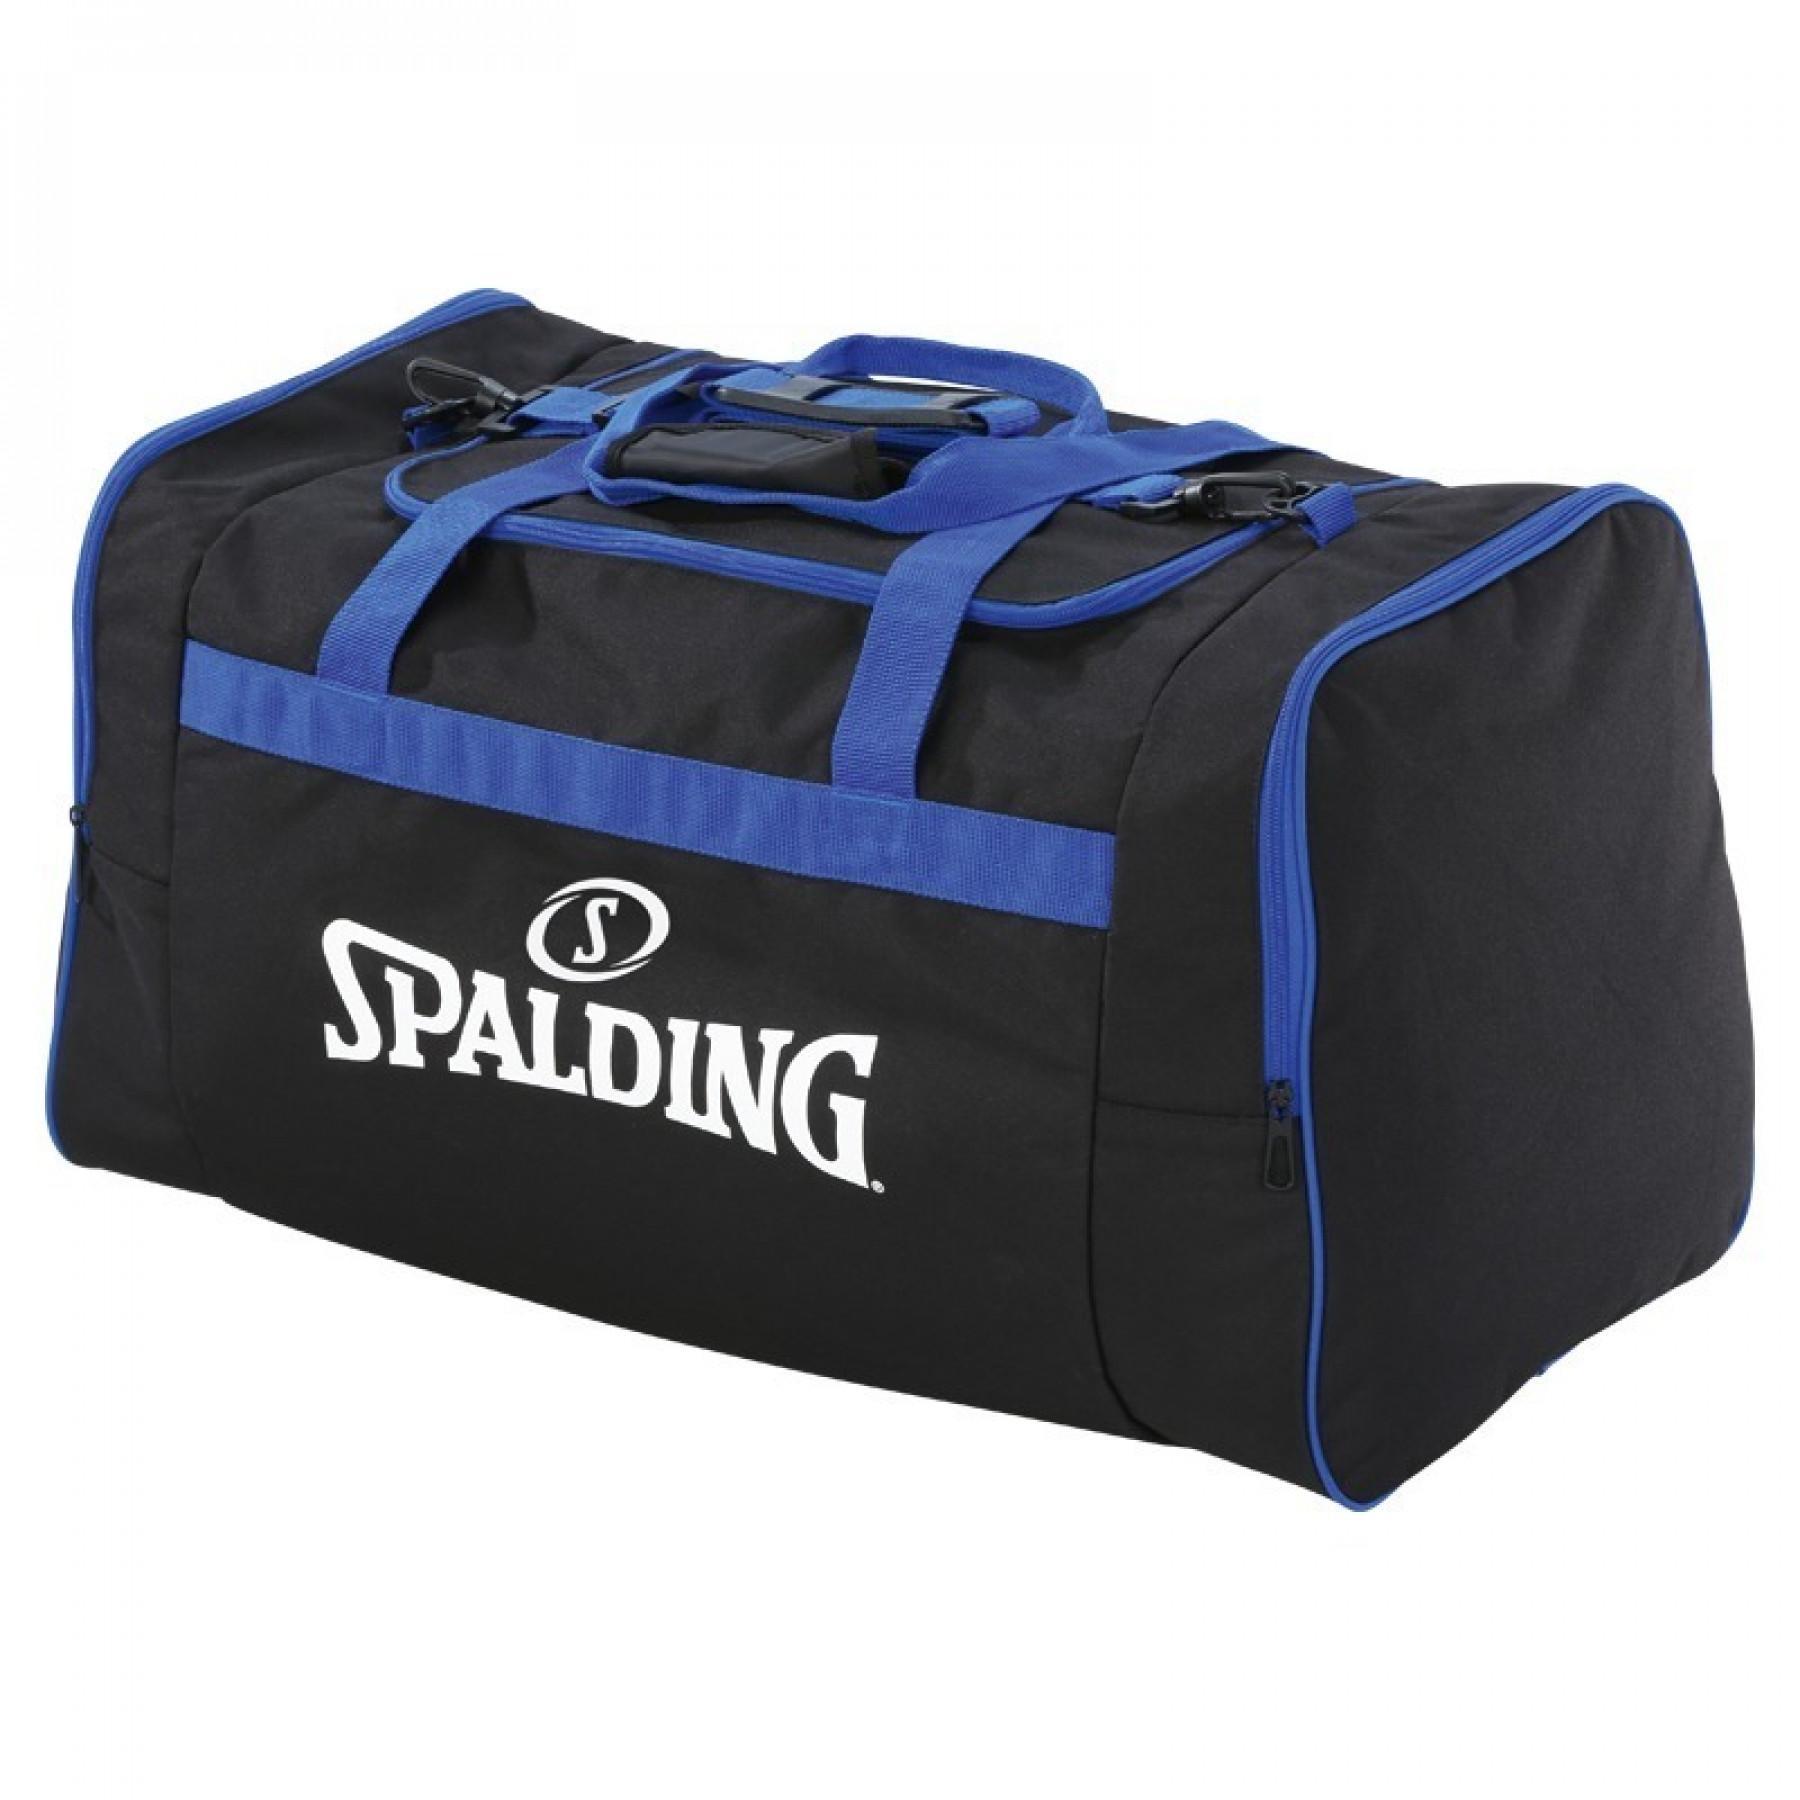 Spalding Sportbag Medium